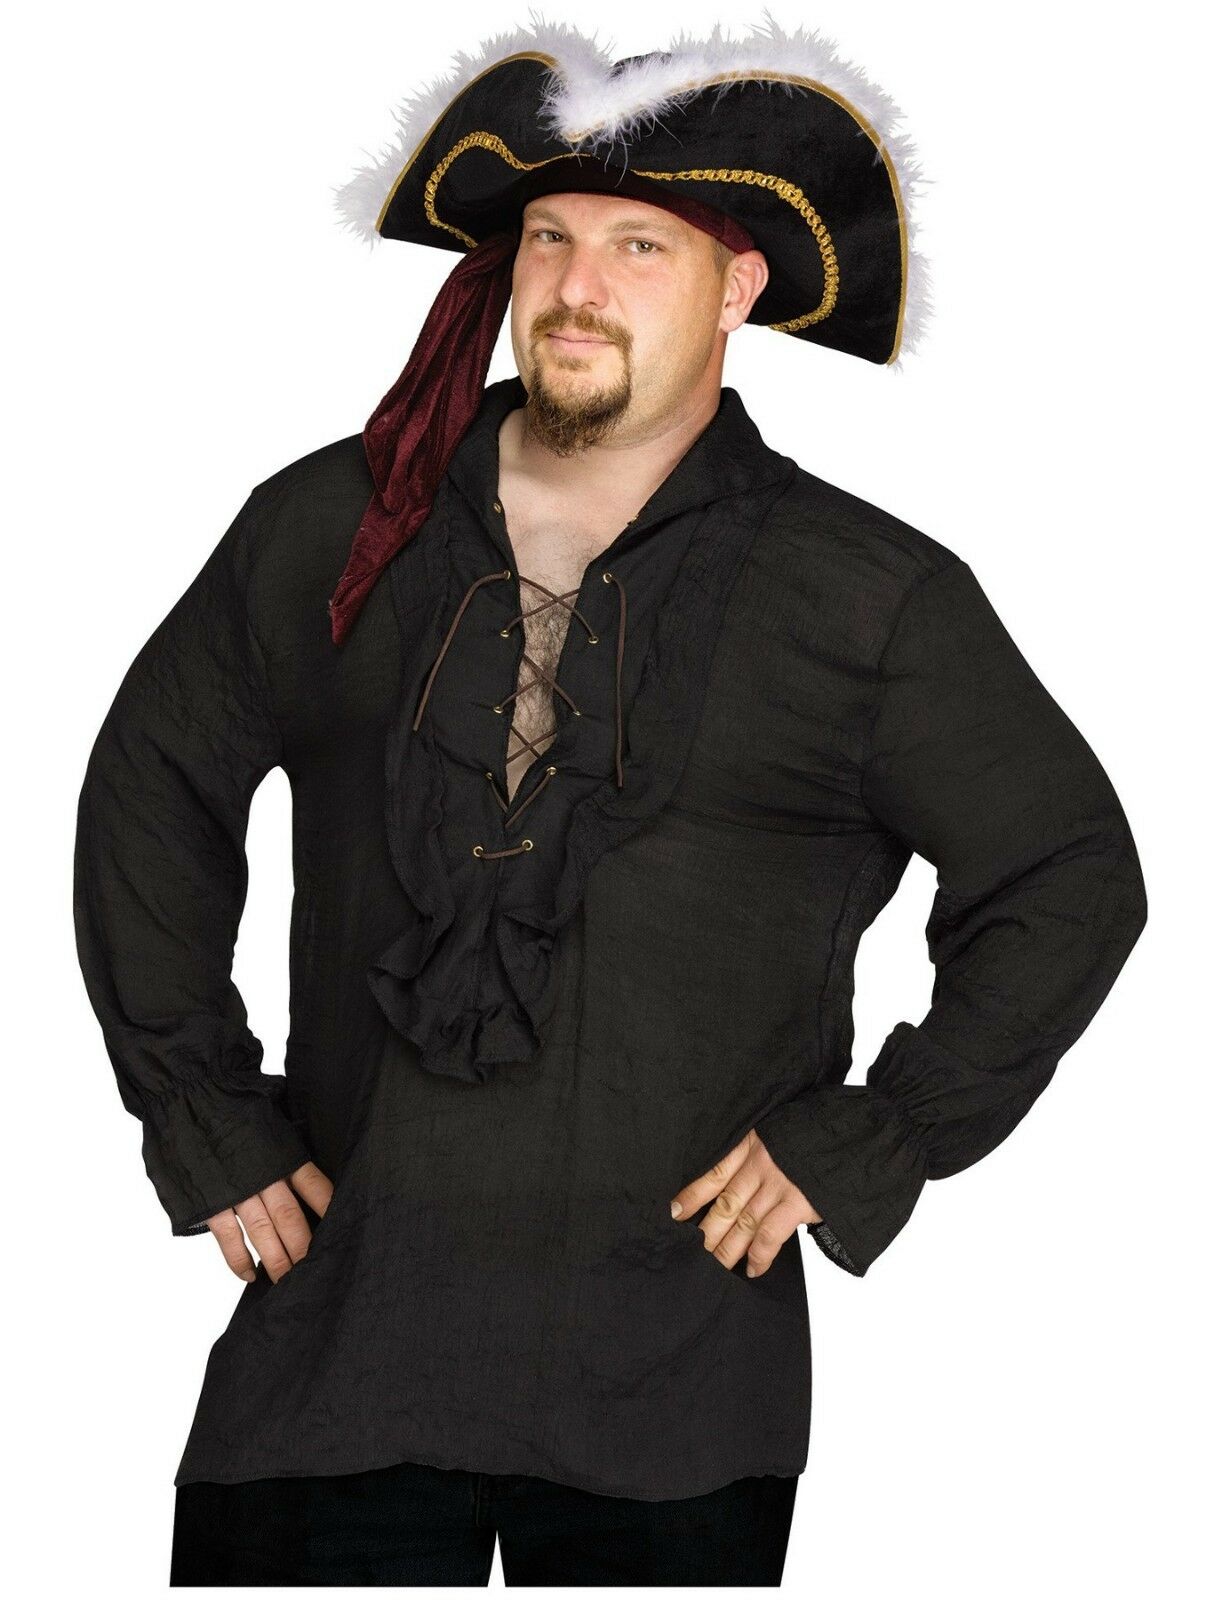 Swashbuckler Pirate Vampire Shirt Adult Plus Size Men Costume Accessory